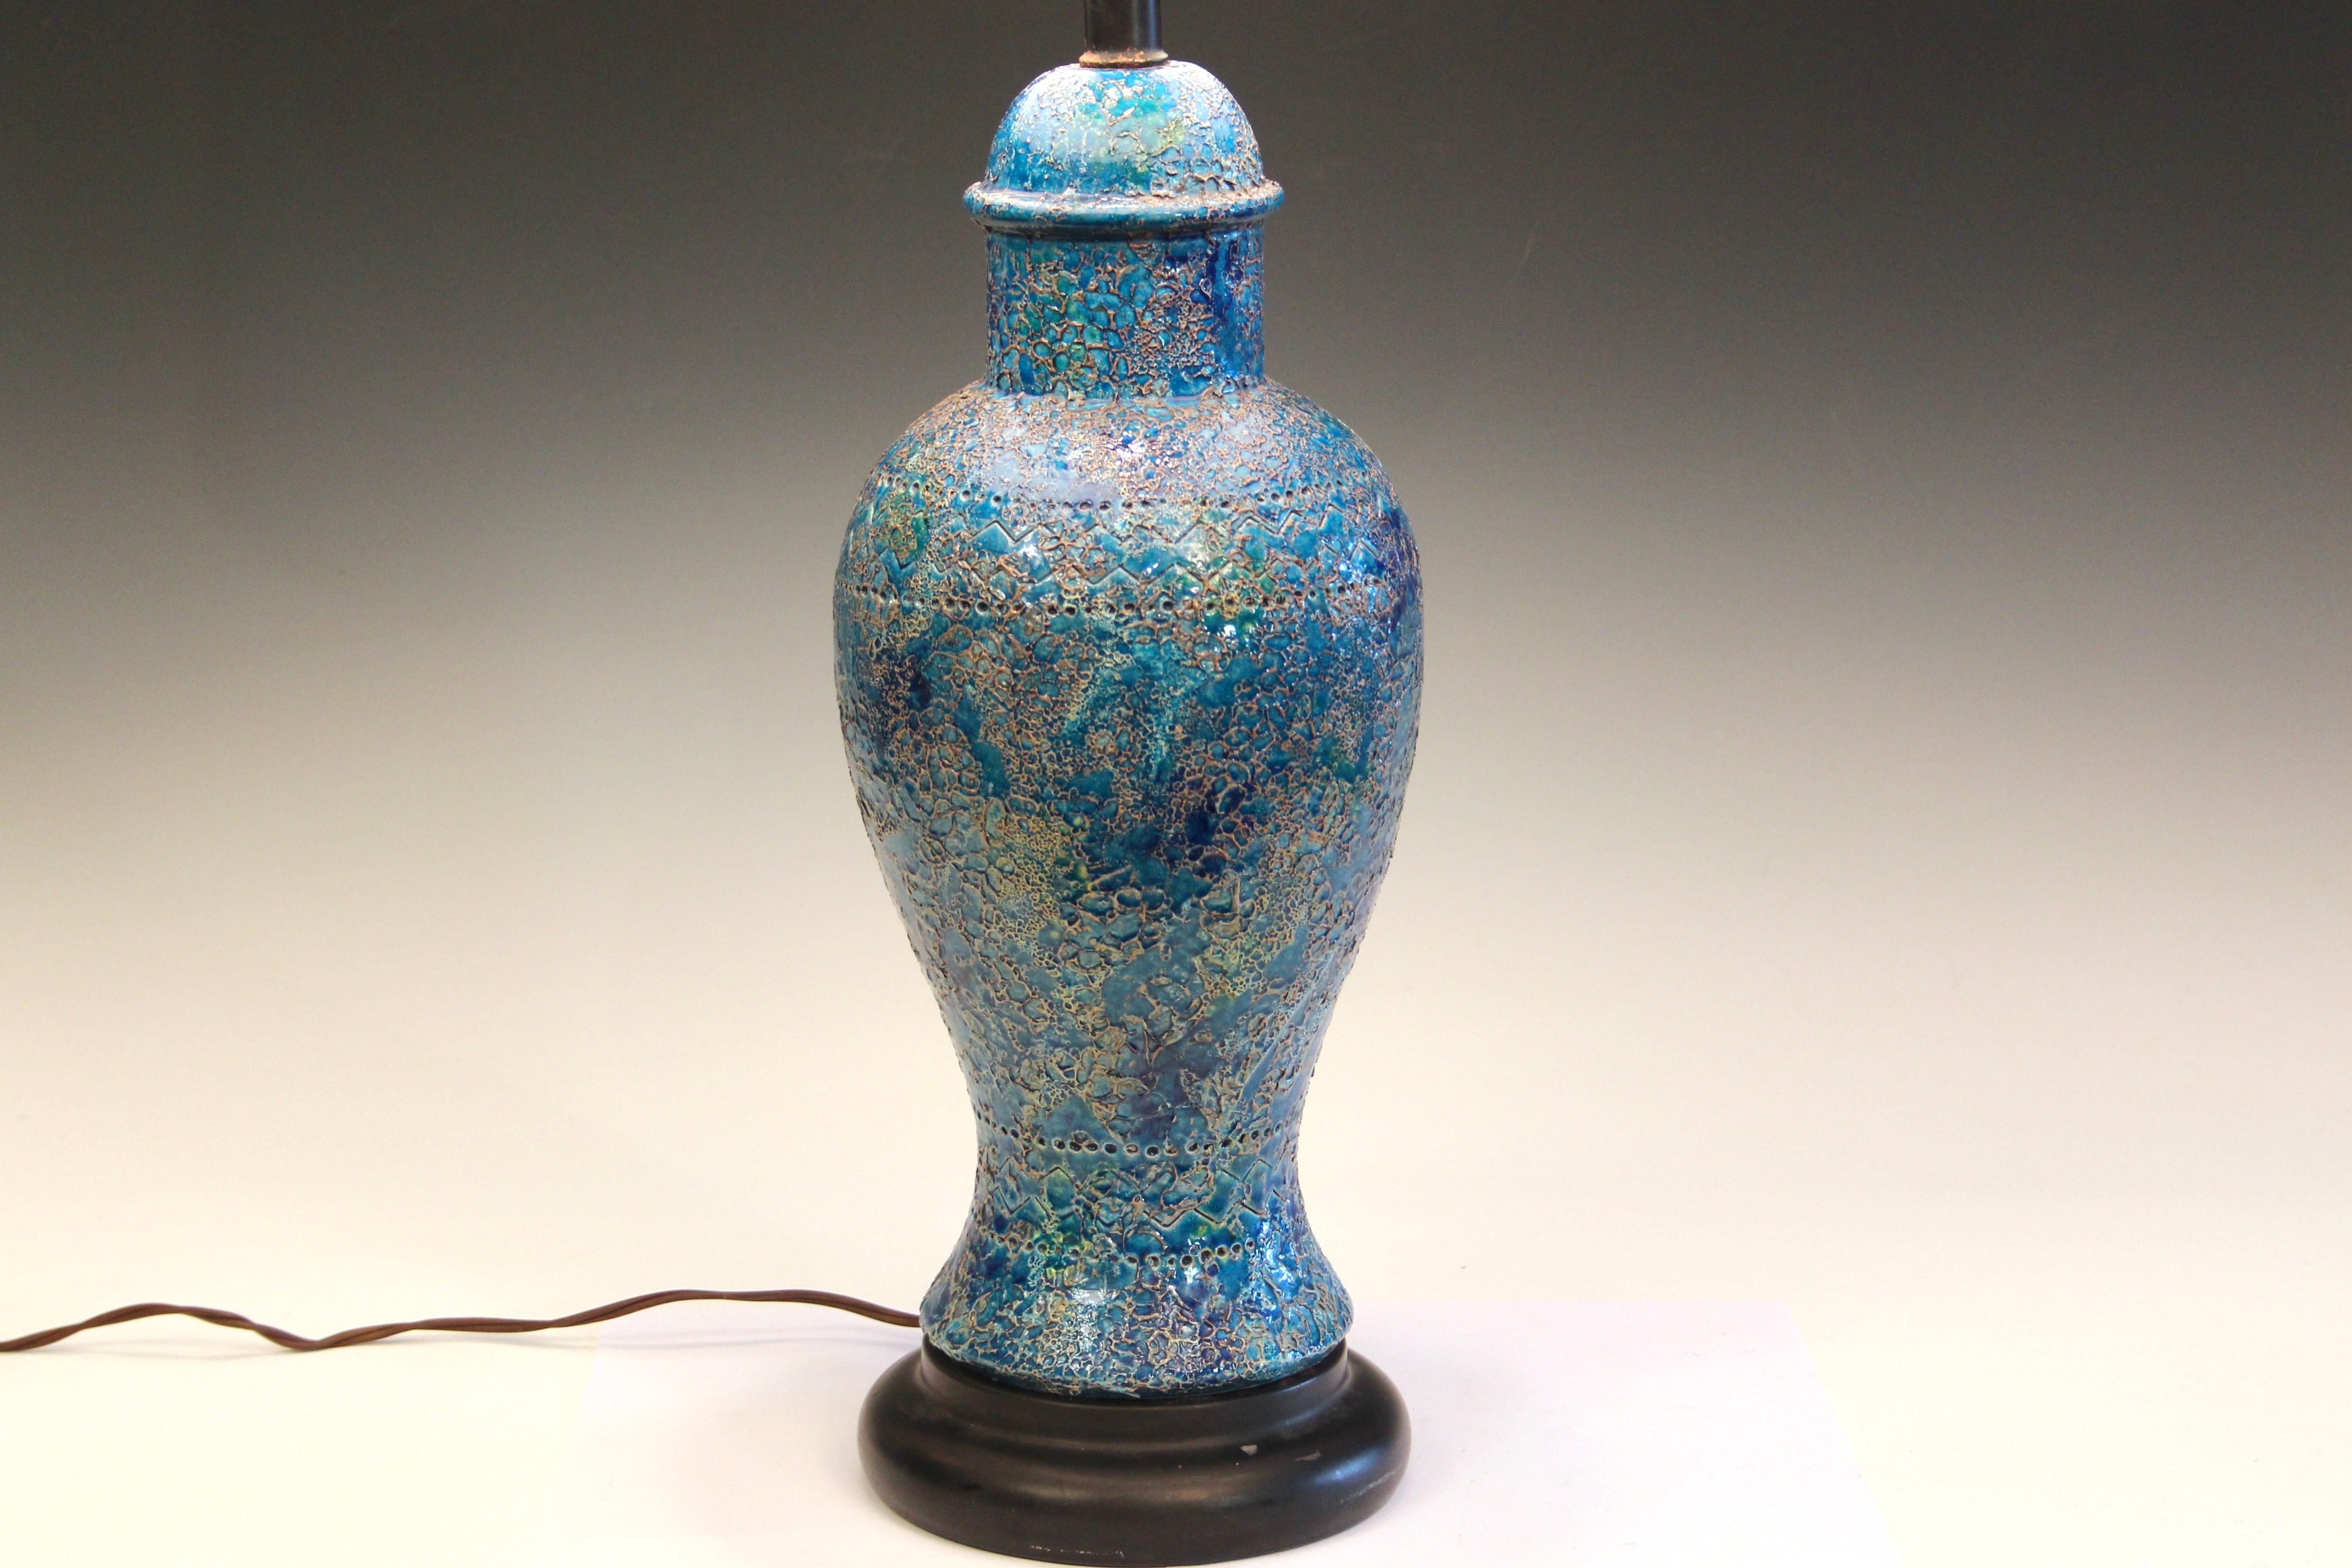 Vintage Bitossi pottery lamp in Cinese blue lava glaze, circa 1960's. Measures: 30